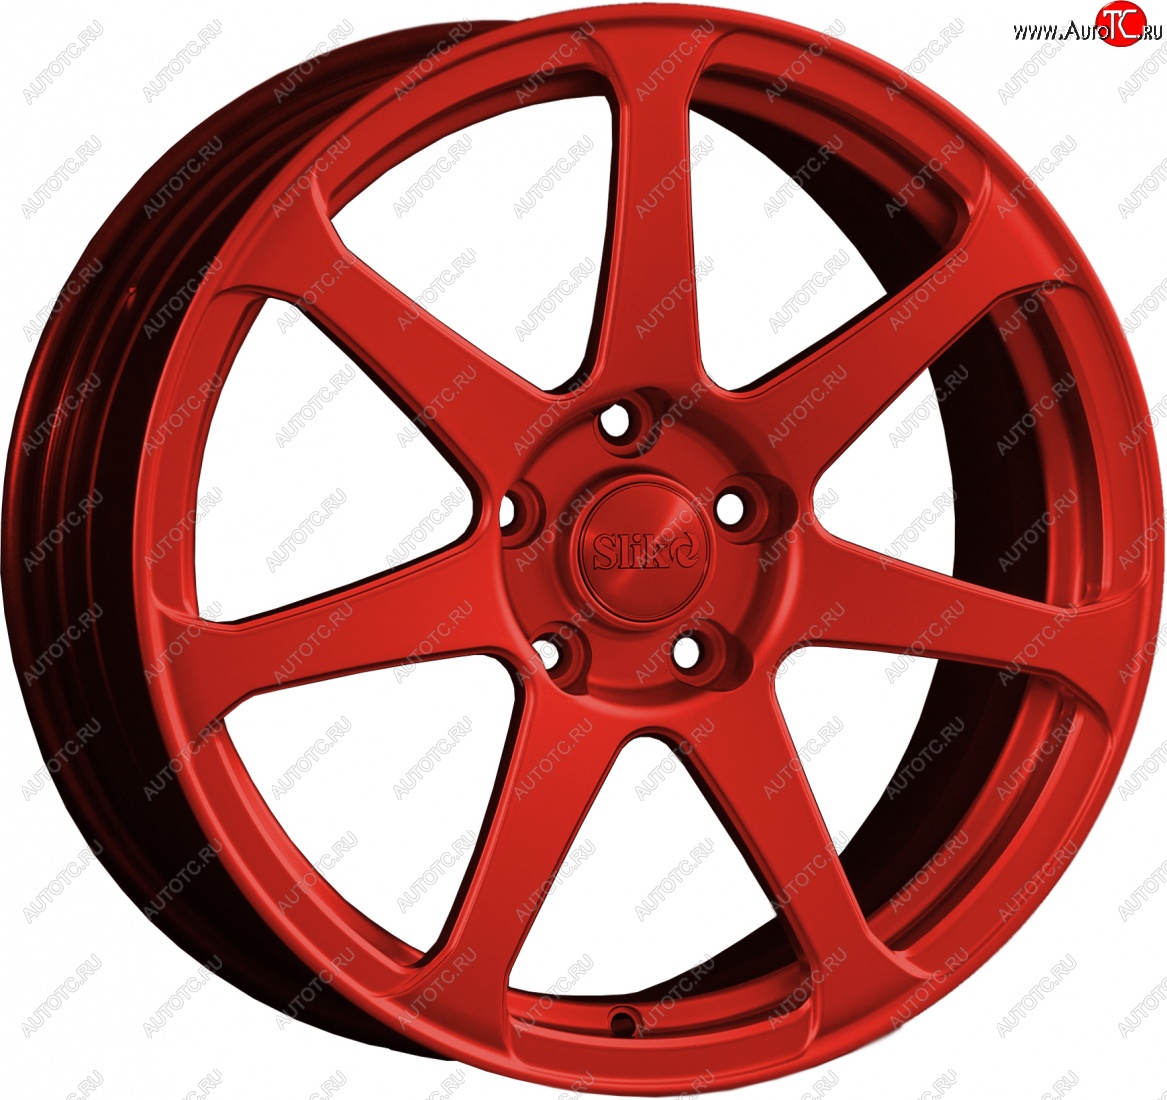 14 499 р. Кованый диск Slik classik R17x7.5 Candy RED красный 7.5x17 Toyota Allion T240 седан дорестайлинг (2001-2004) 5x100.0xDIA54.1xET45.0 (Цвет: Candy RED красный 7.5x17)